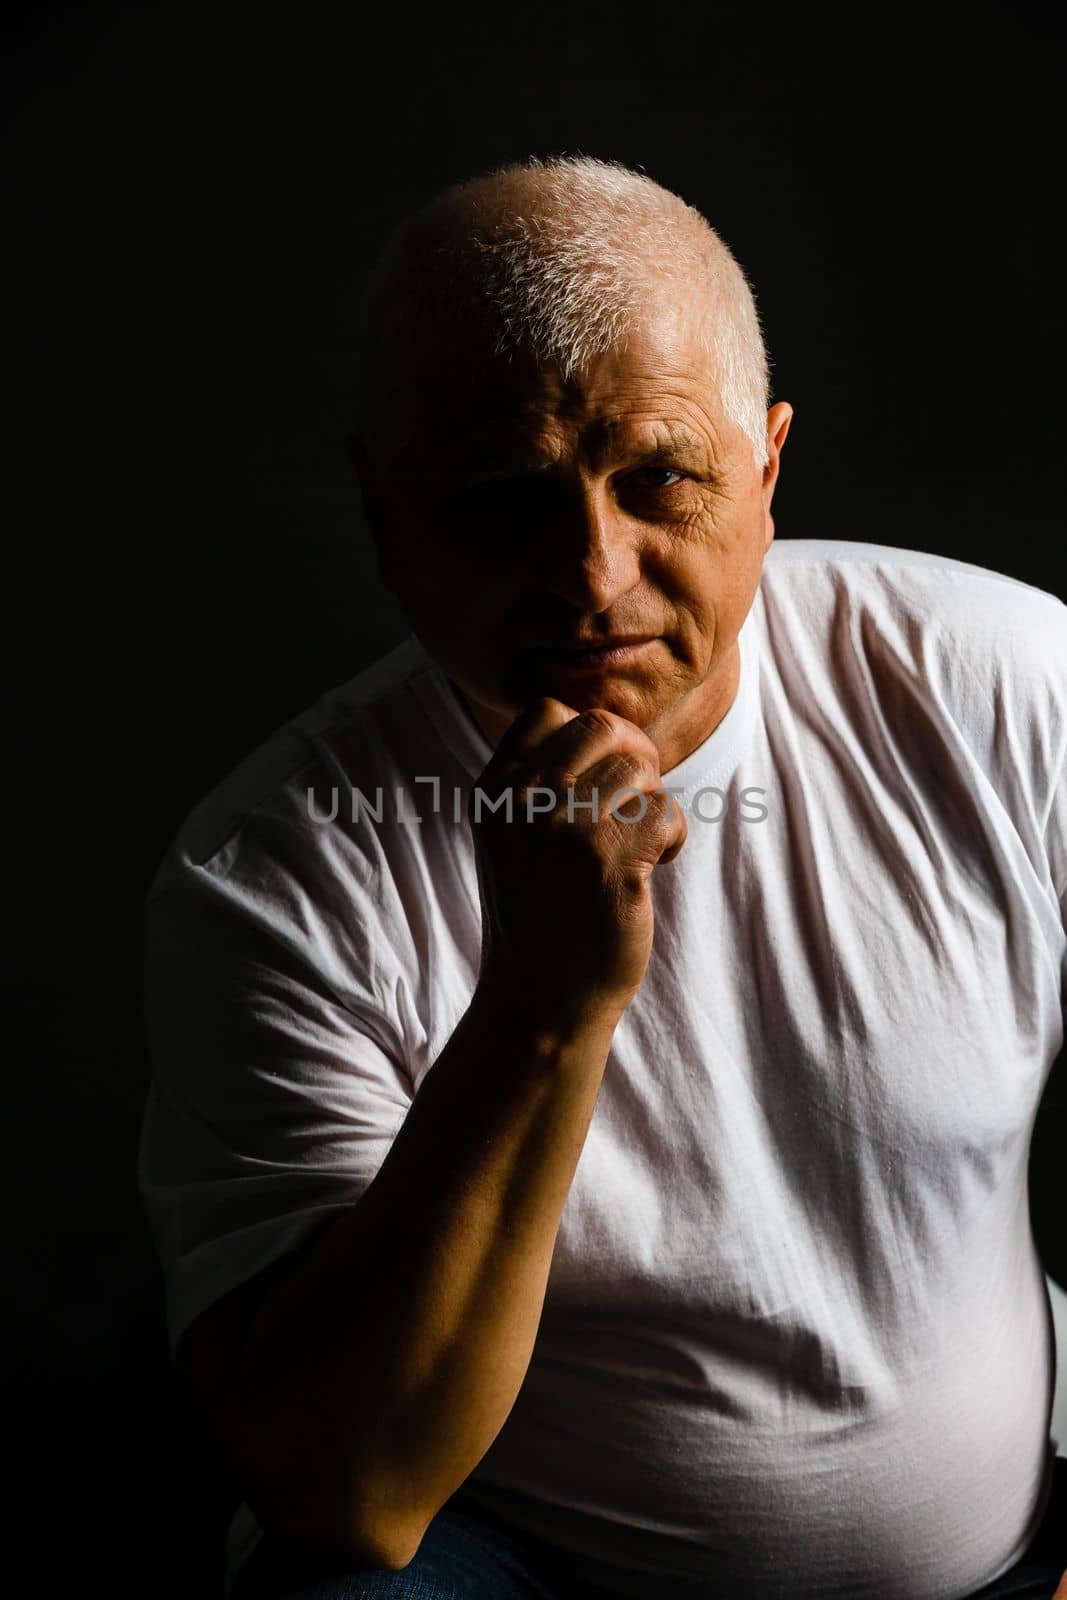 Old senior man closeup serious expression portrait